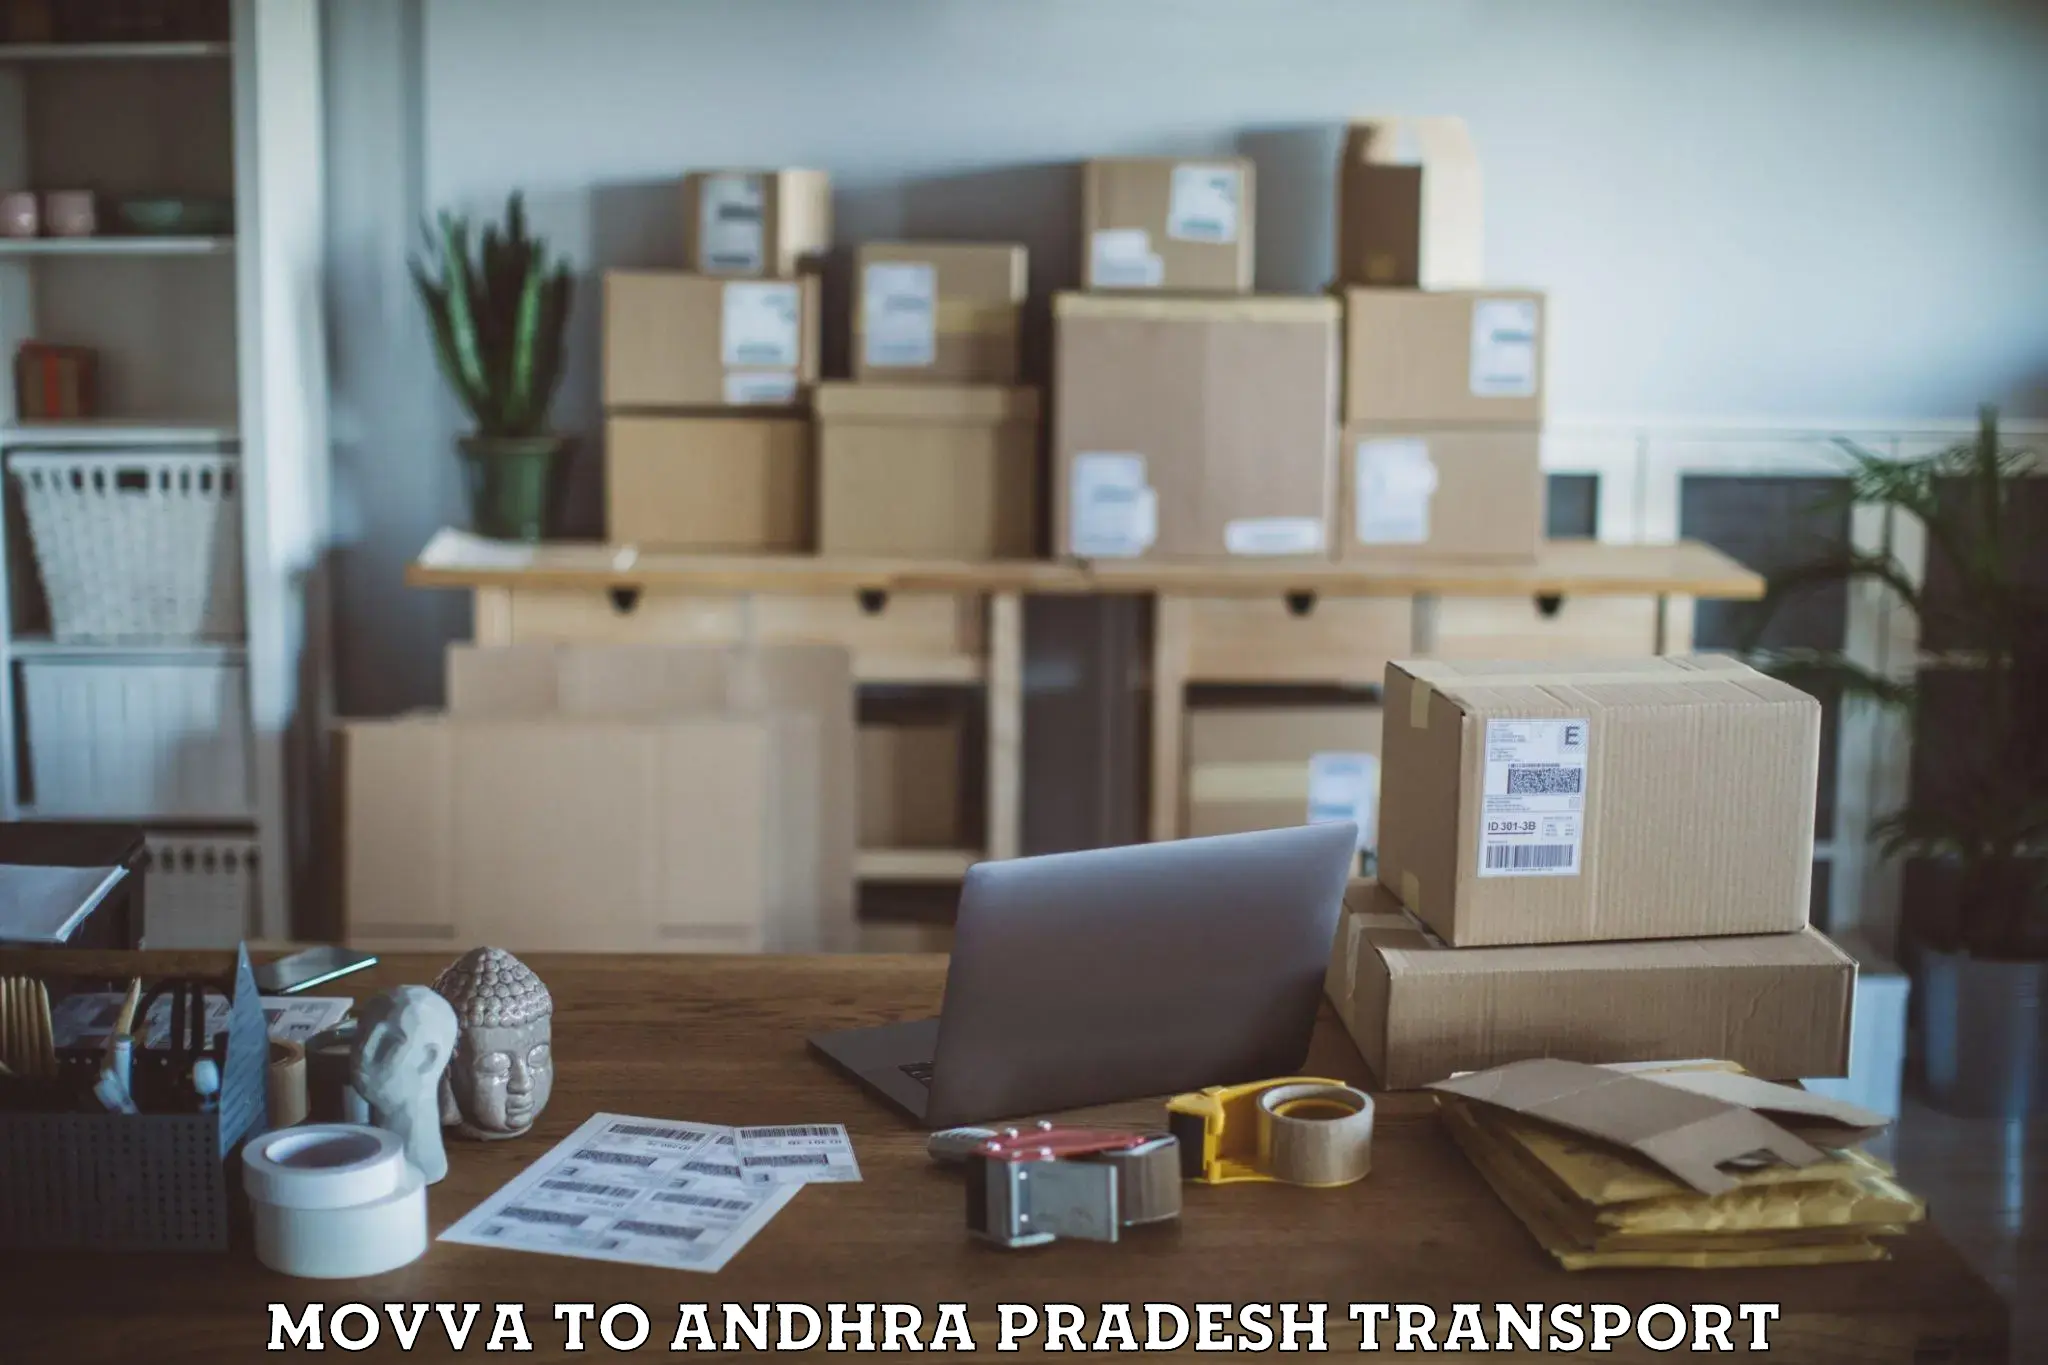 Daily parcel service transport Movva to Allagadda